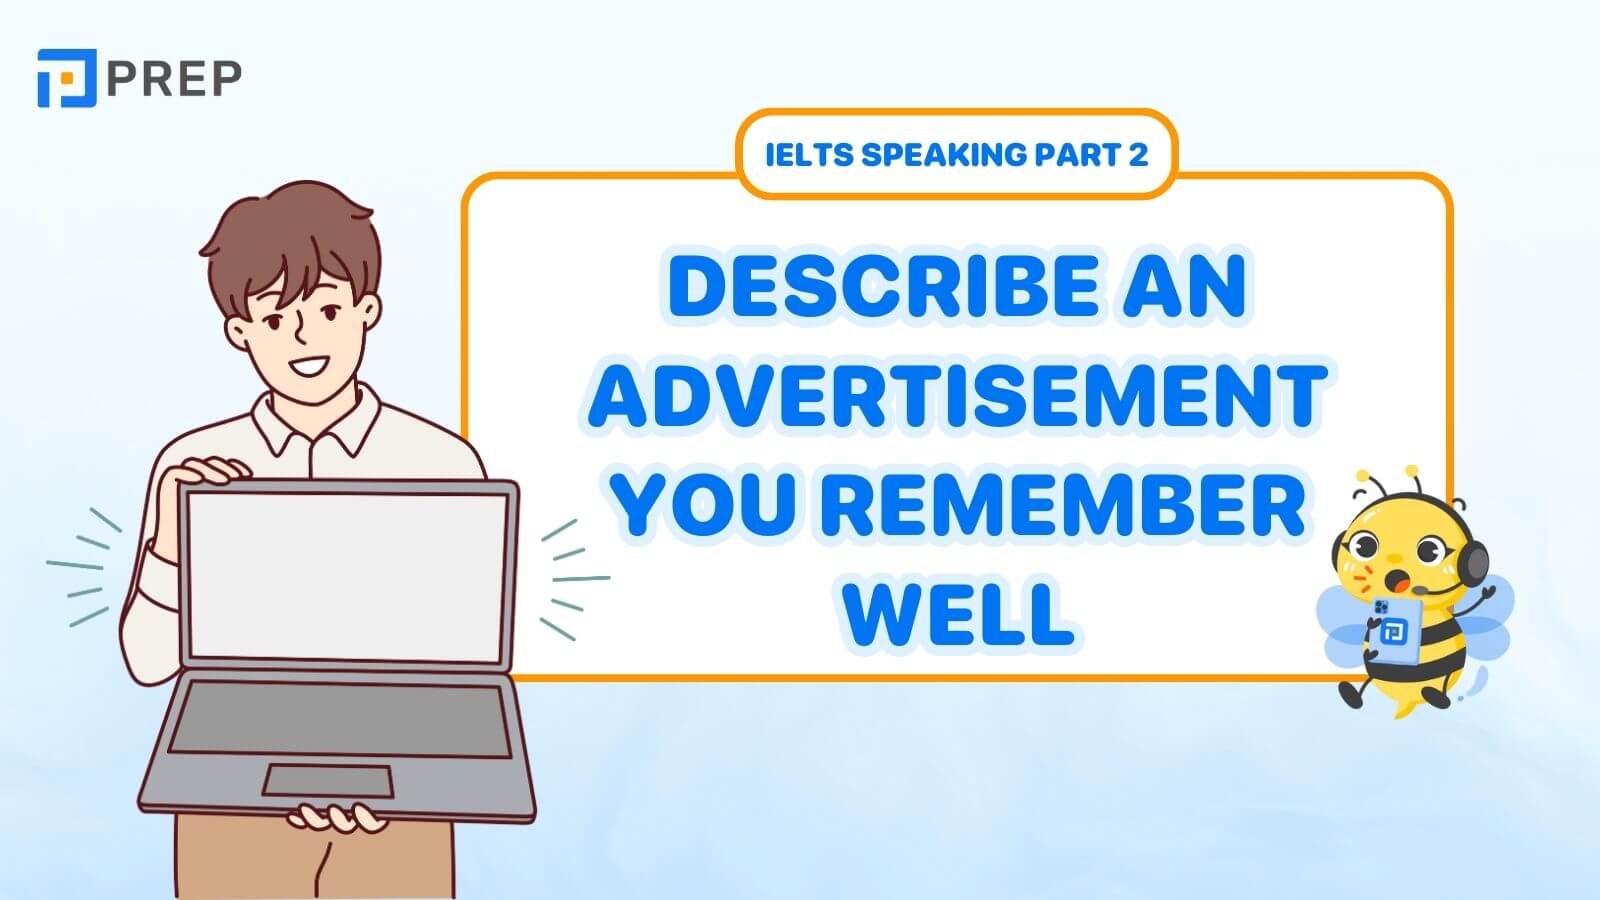 Describe an advertisement you remember well